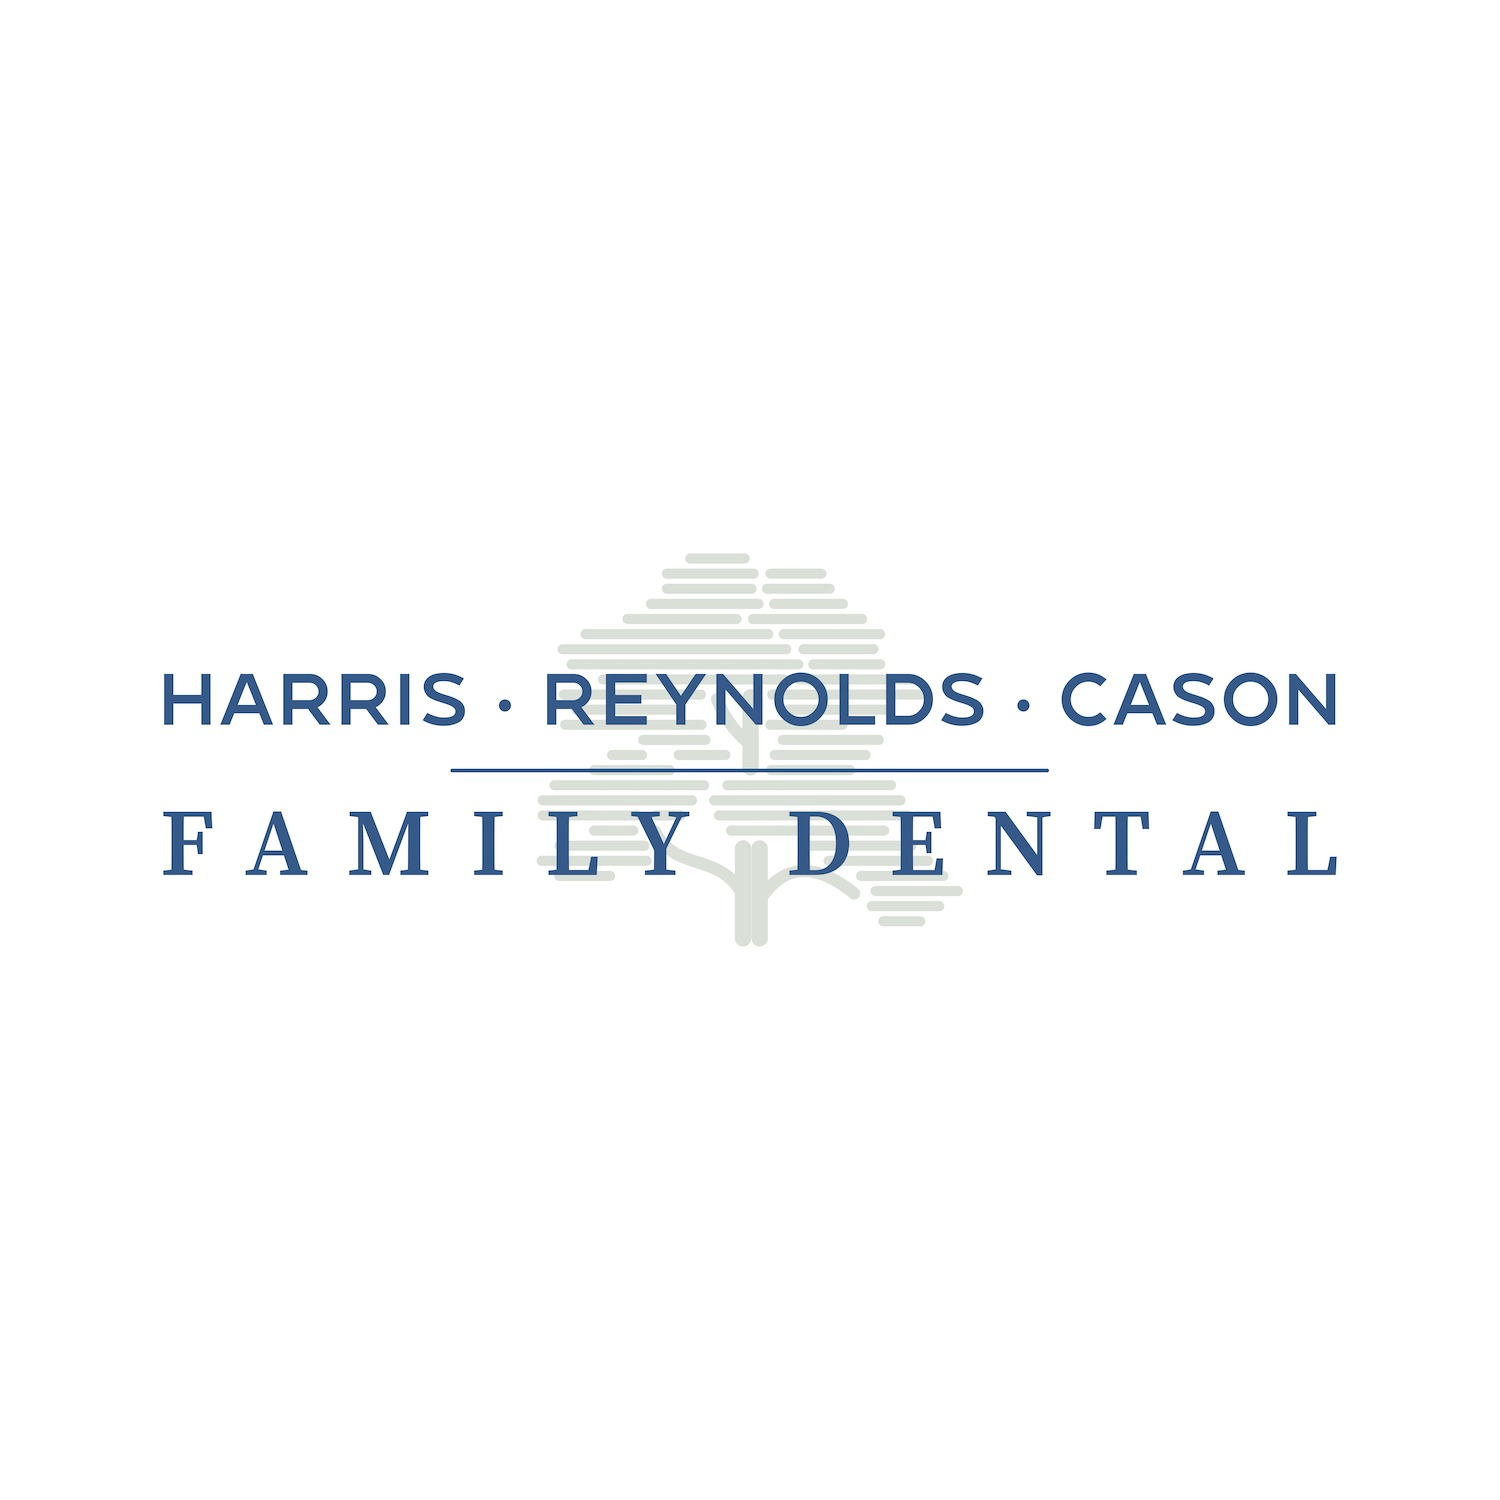 Harris, Reynolds & Cason Family Dental - Little Rock, AR 72210 - (501)712-5828 | ShowMeLocal.com